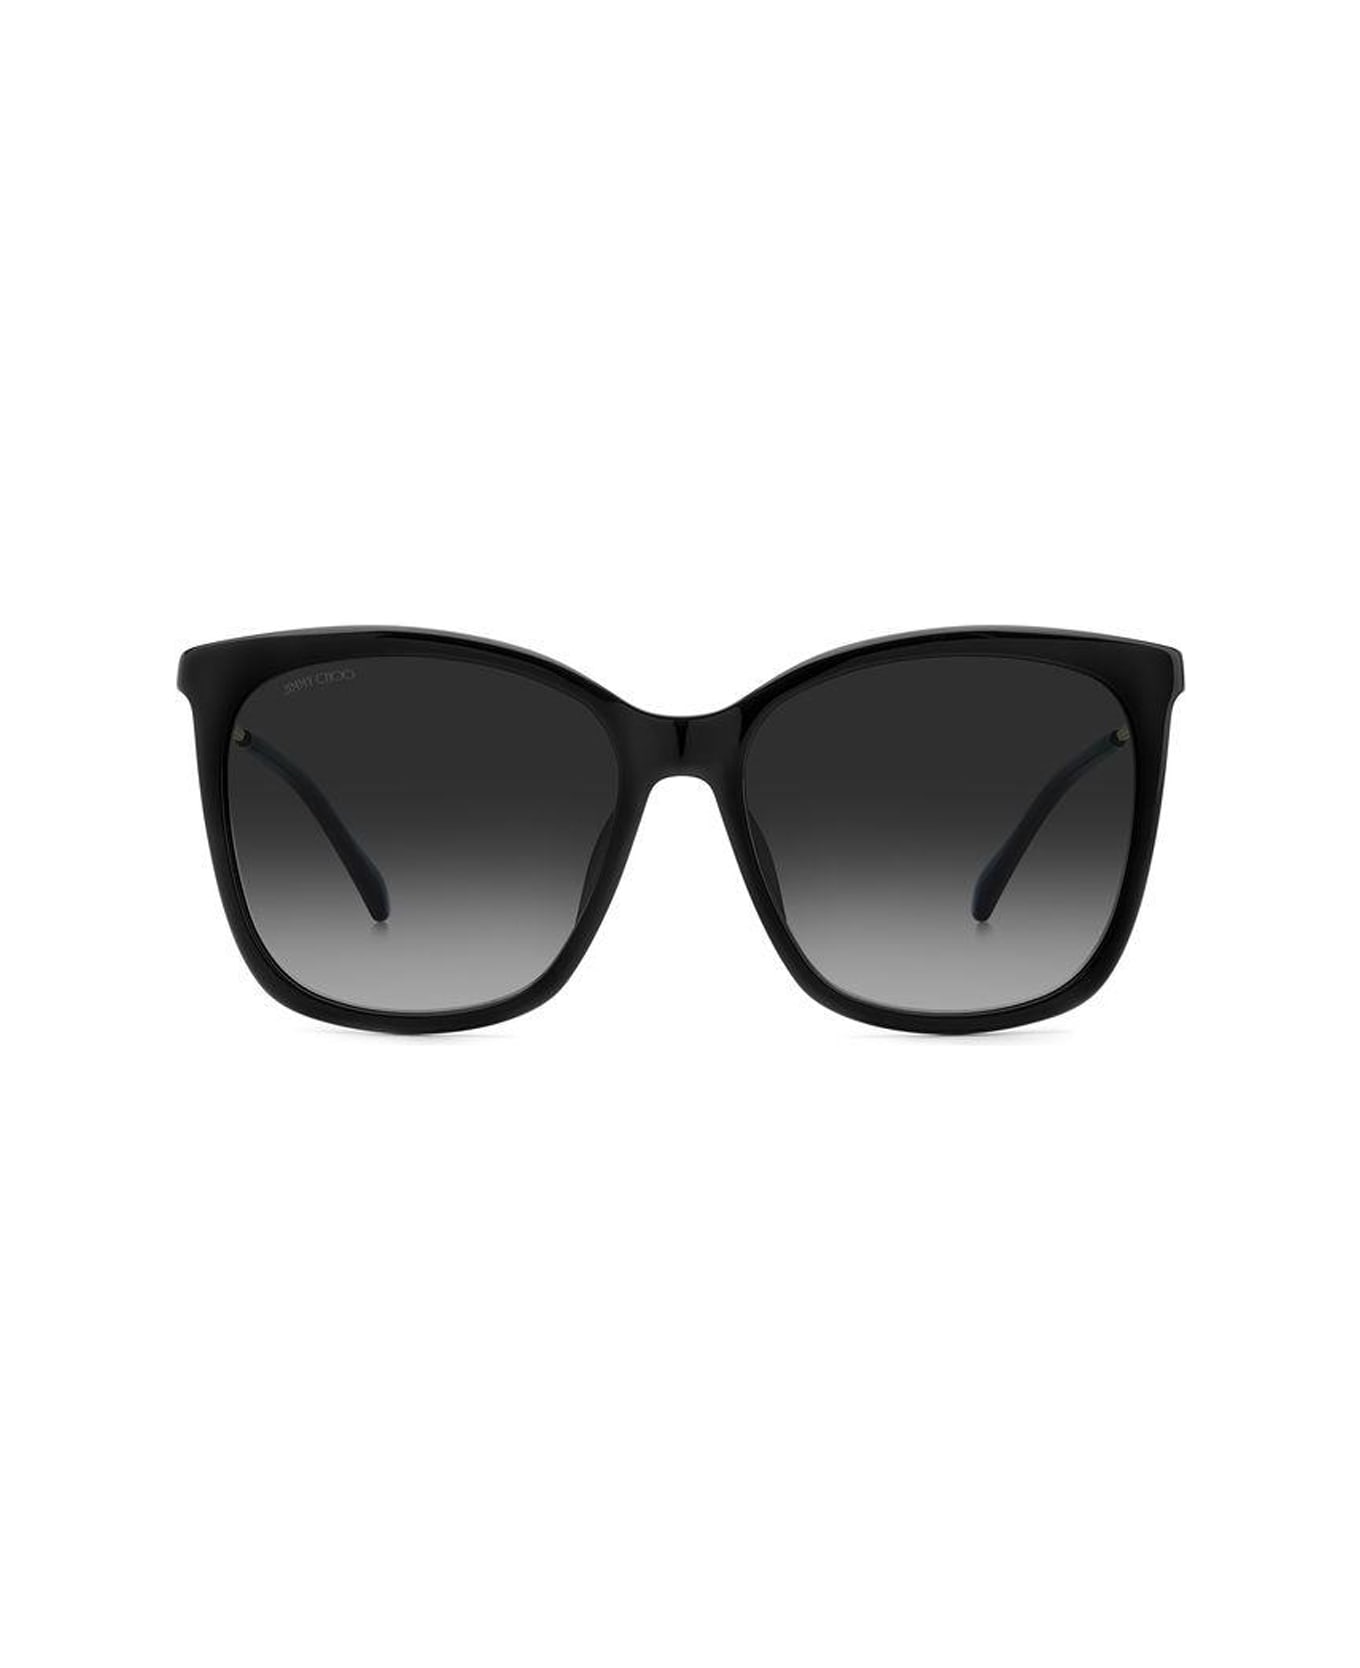 Jimmy Choo Eyewear Jc Nerea/g/s 807/9o Black Sunglasses - Nero